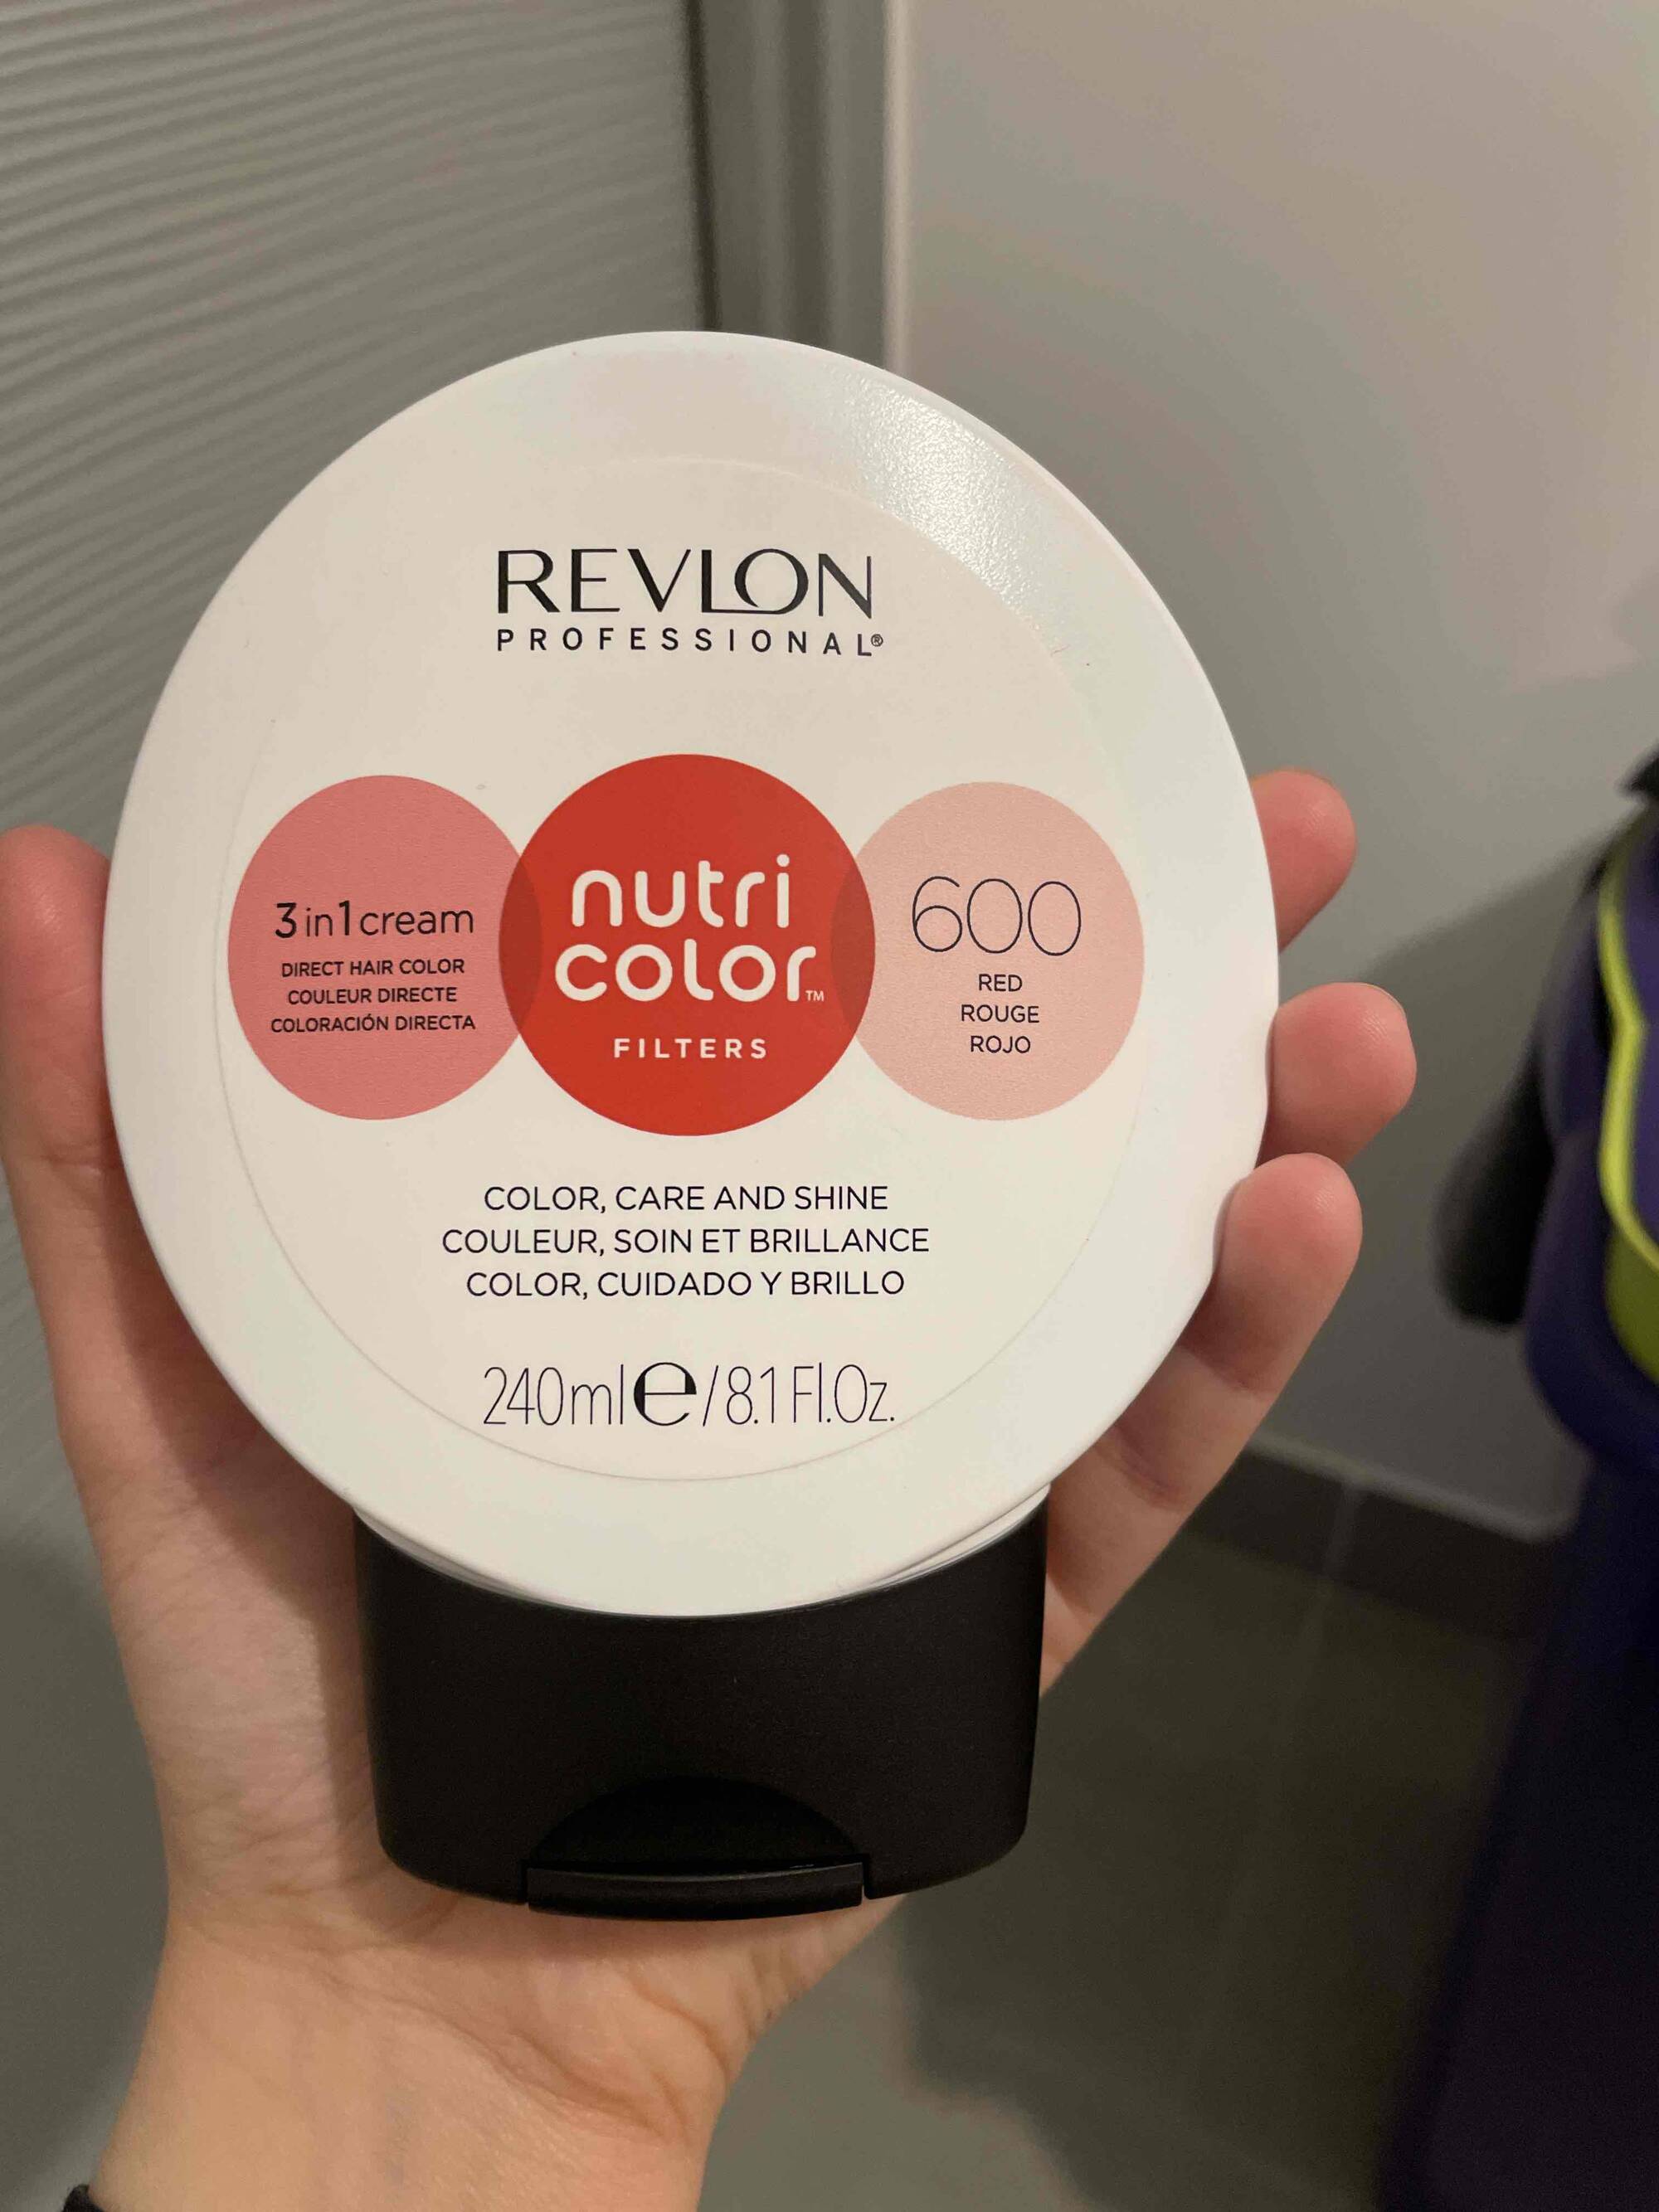 REVLON PROFESSIONAL - Nutricolor filters - 3 in 1 cream 600 red